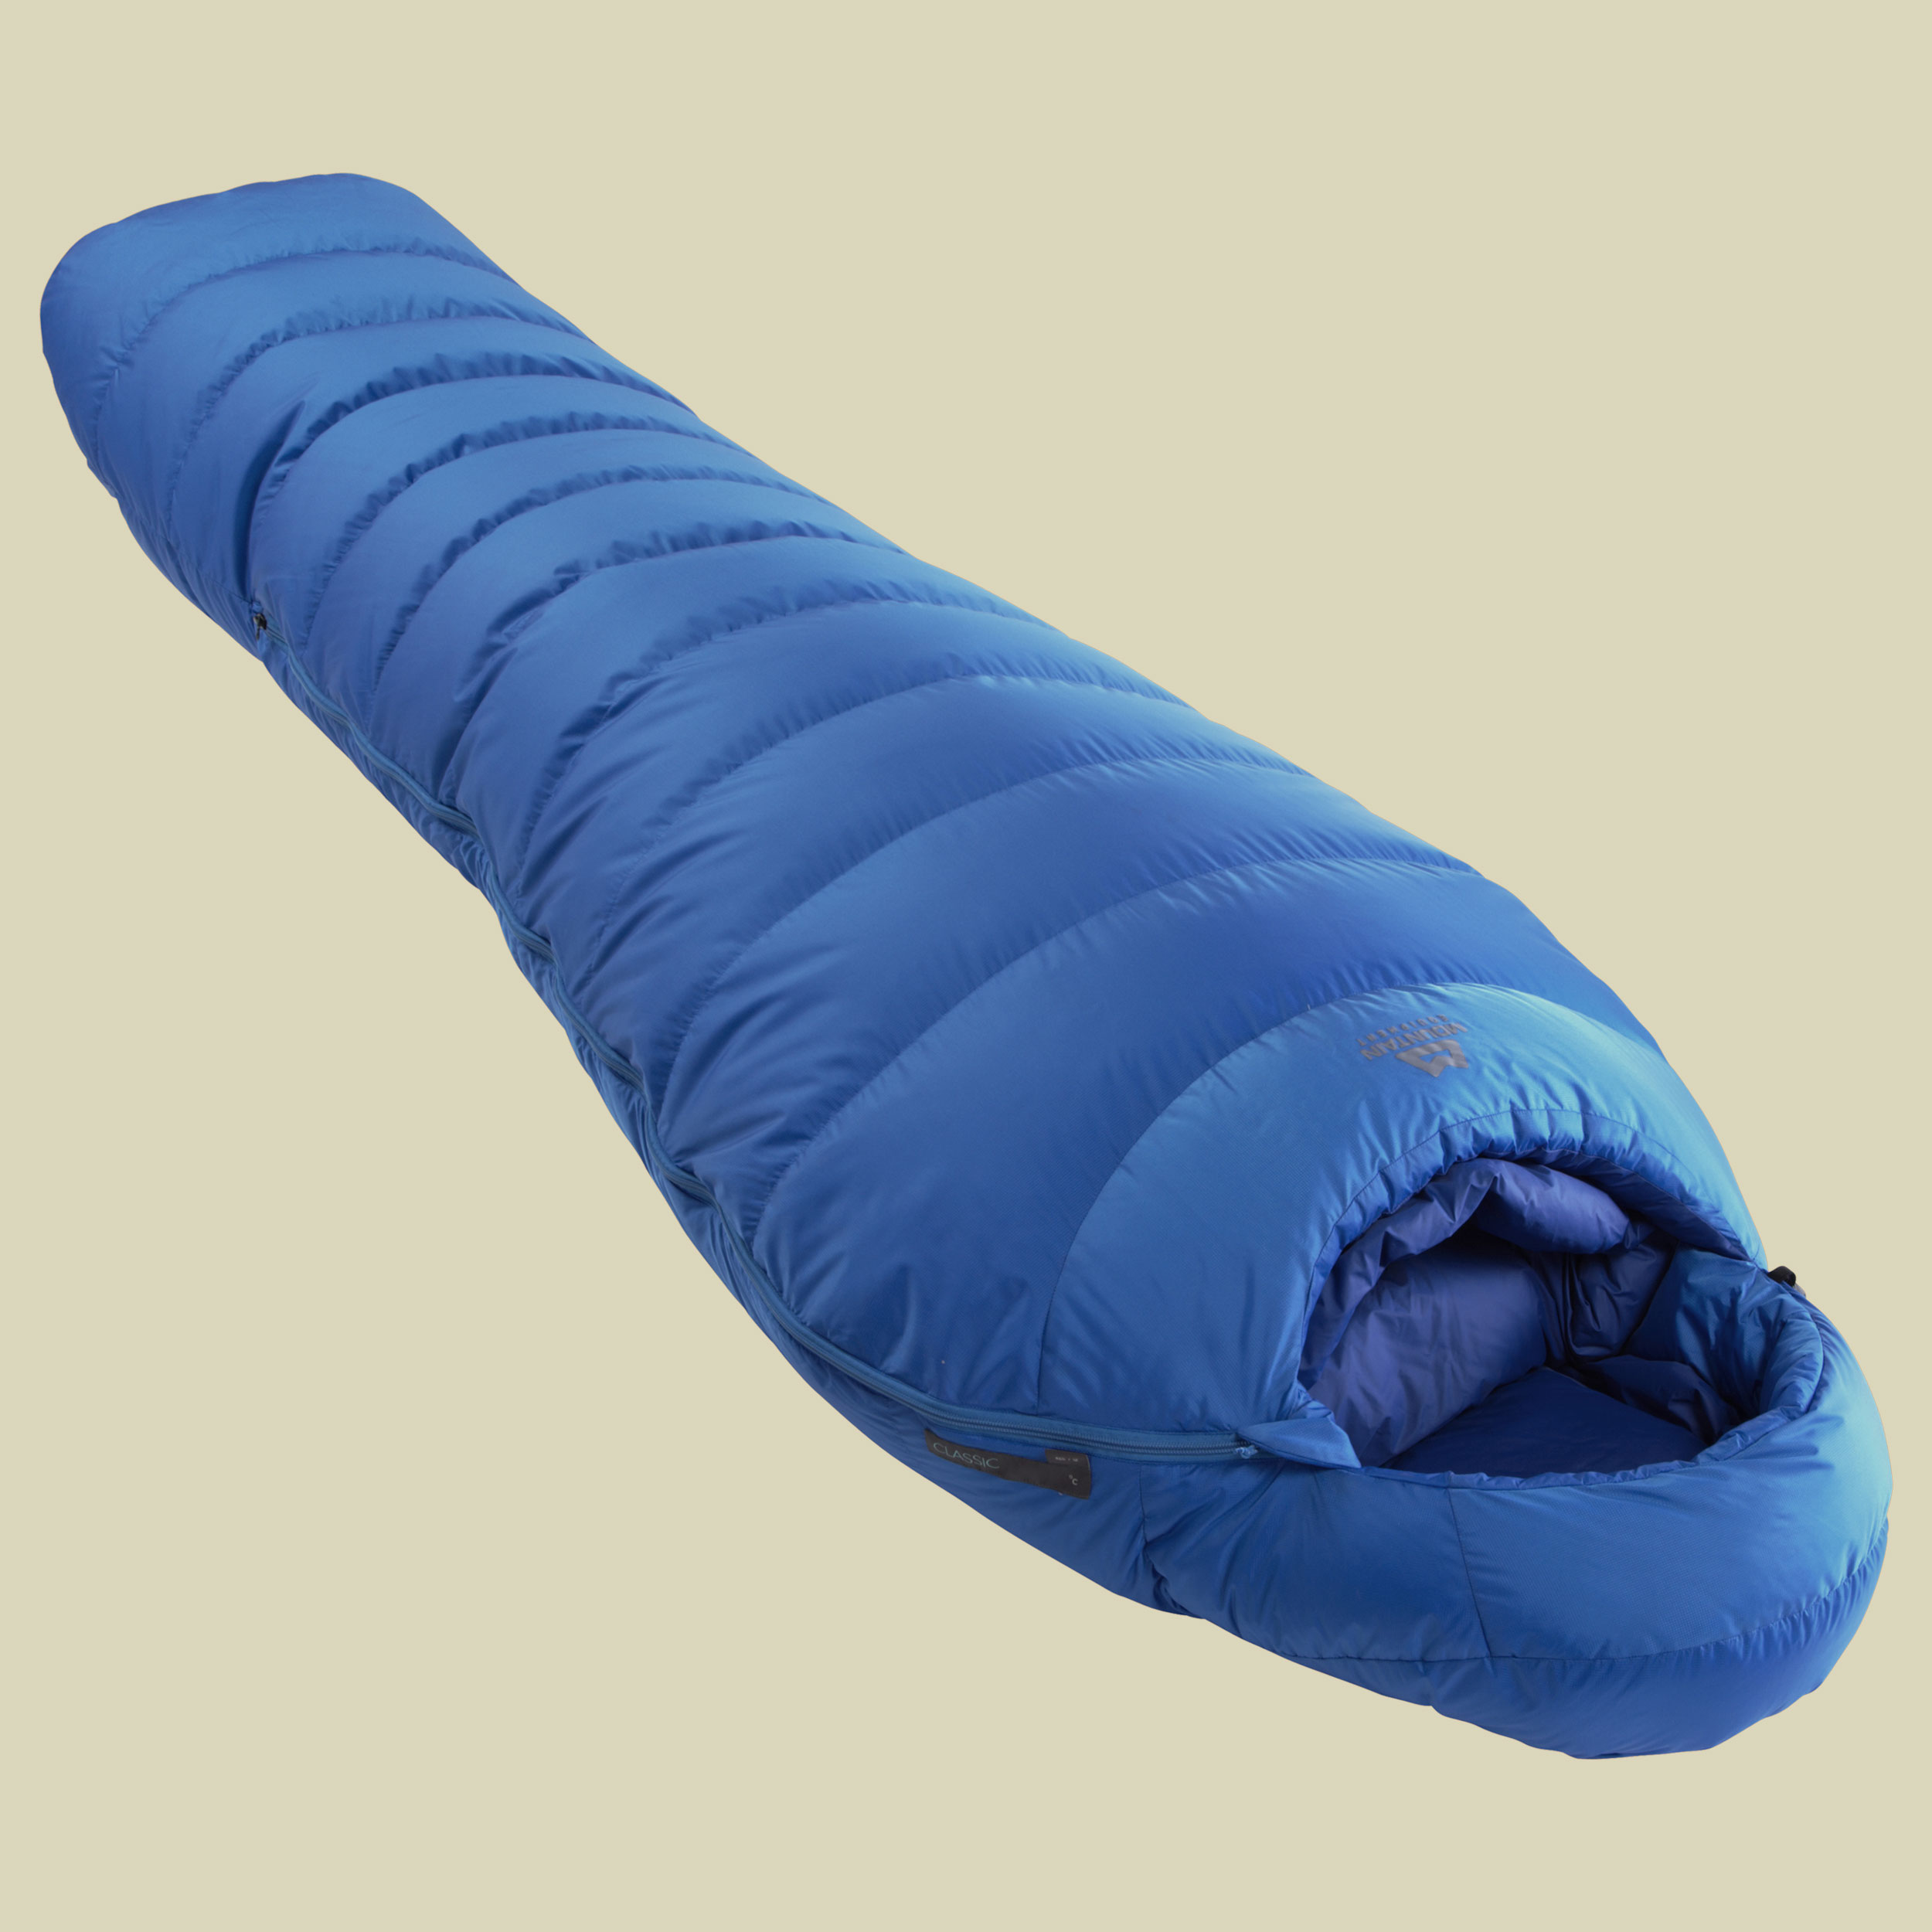 Classic 750 long bis Körpergröße Schlafsack 200 cm  Farbe: skydiver, Reißverschluss Schlafsack links